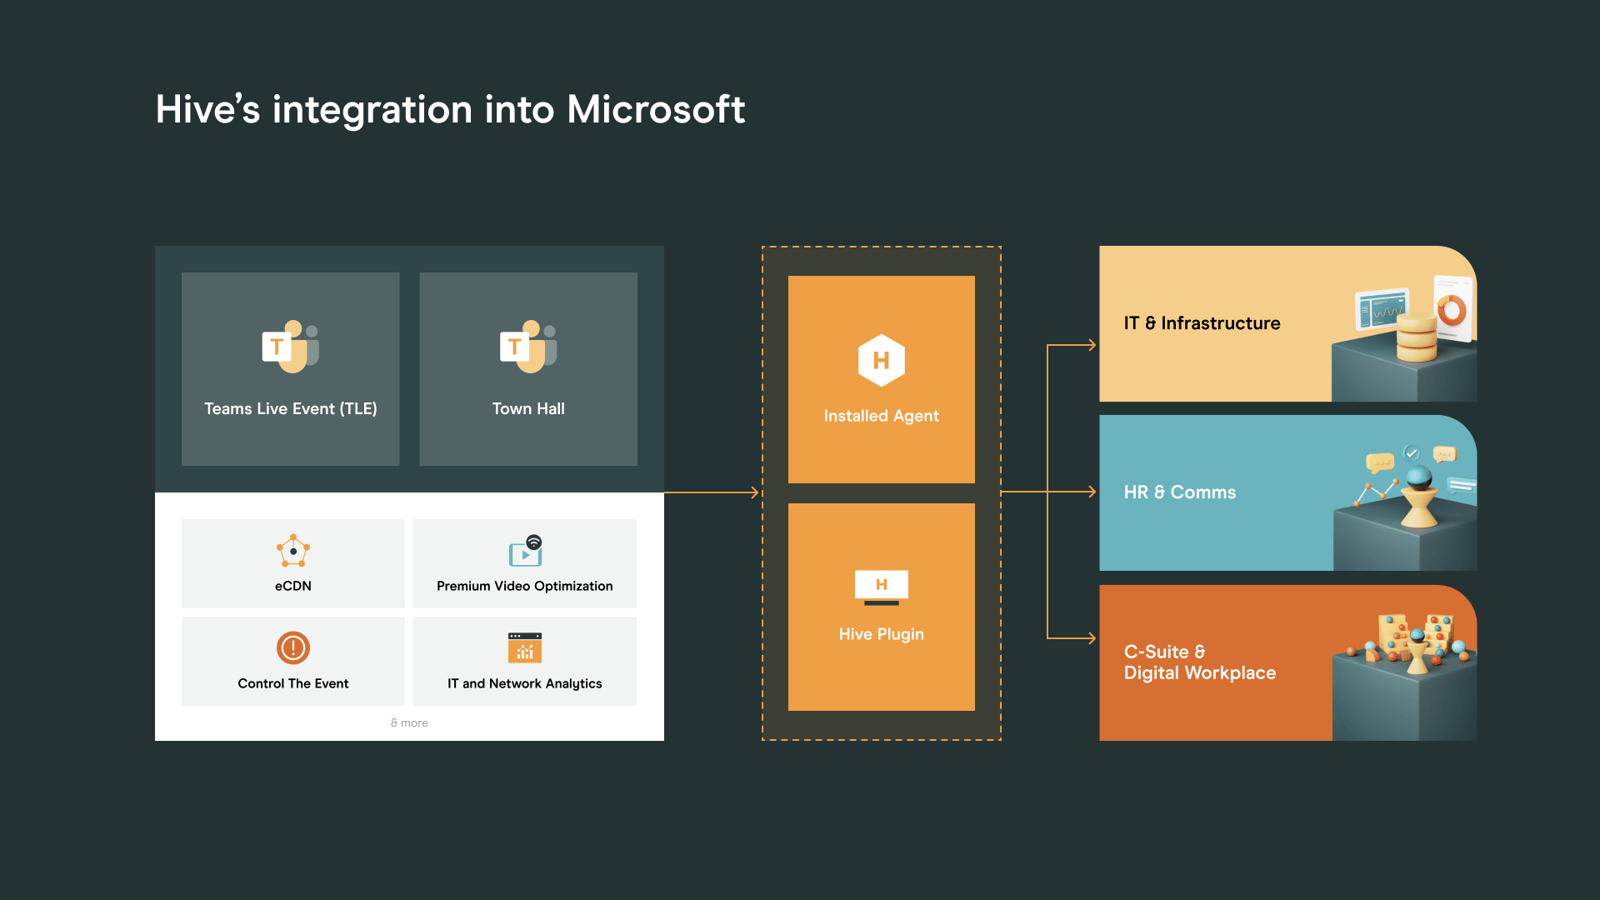 Hive's integration into Microsoft